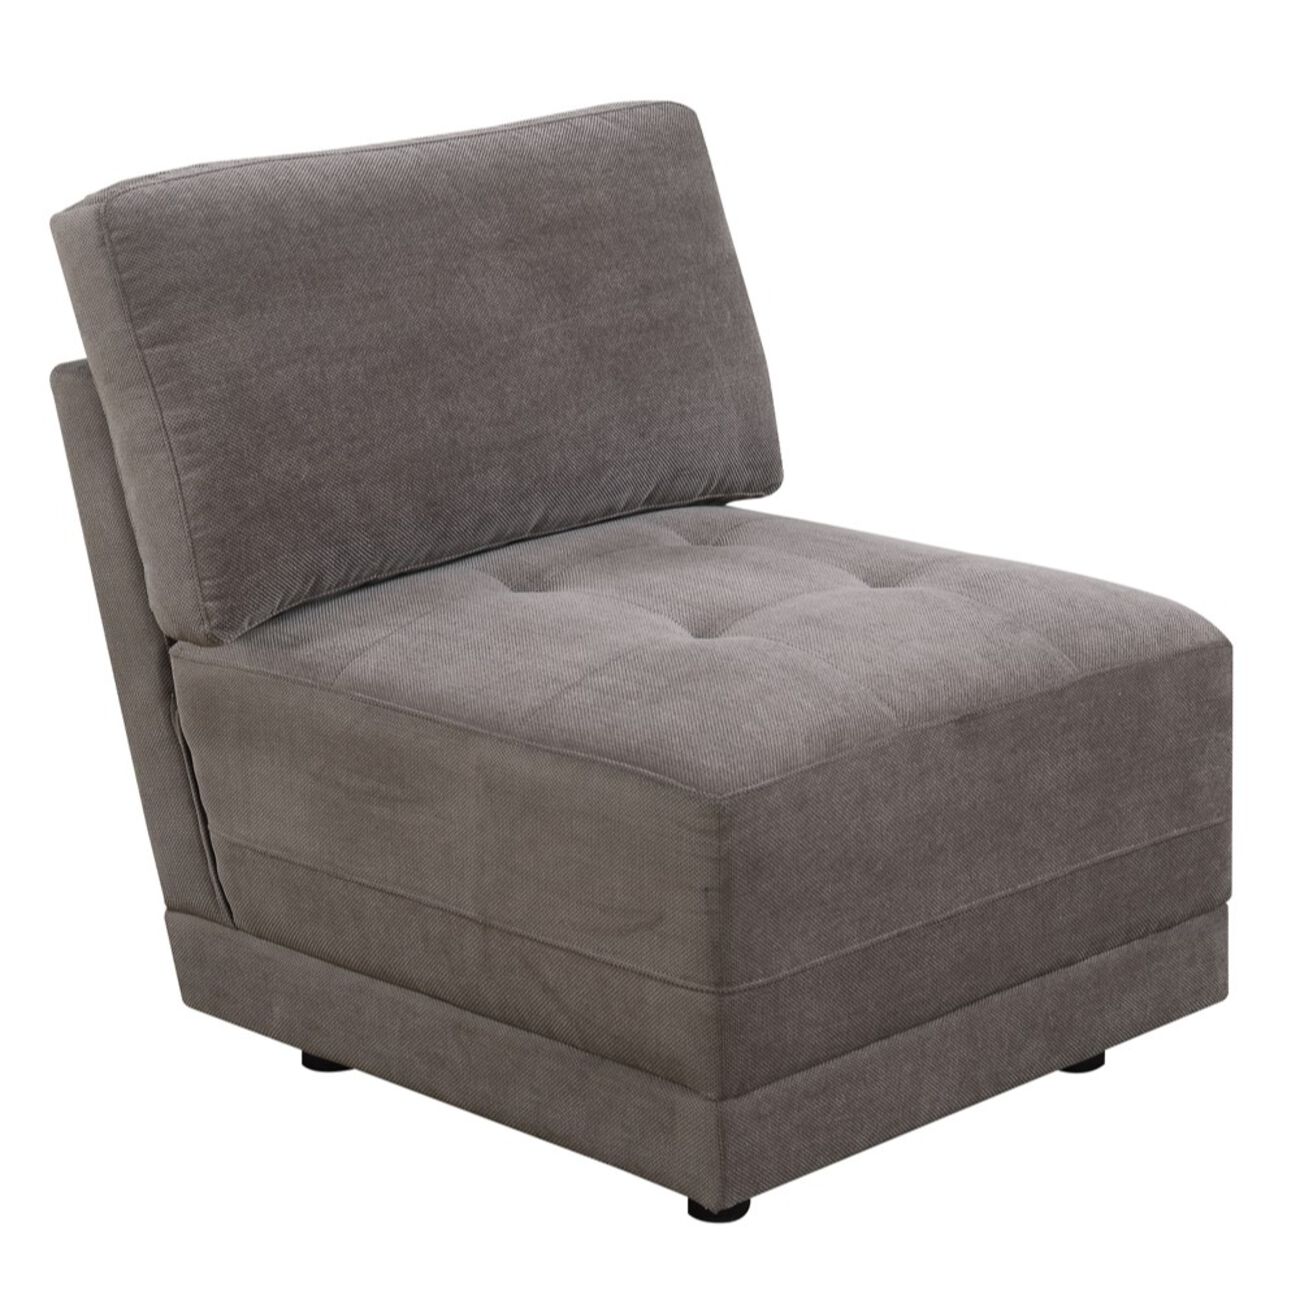 Armless Chair With Back Cushion, Gray